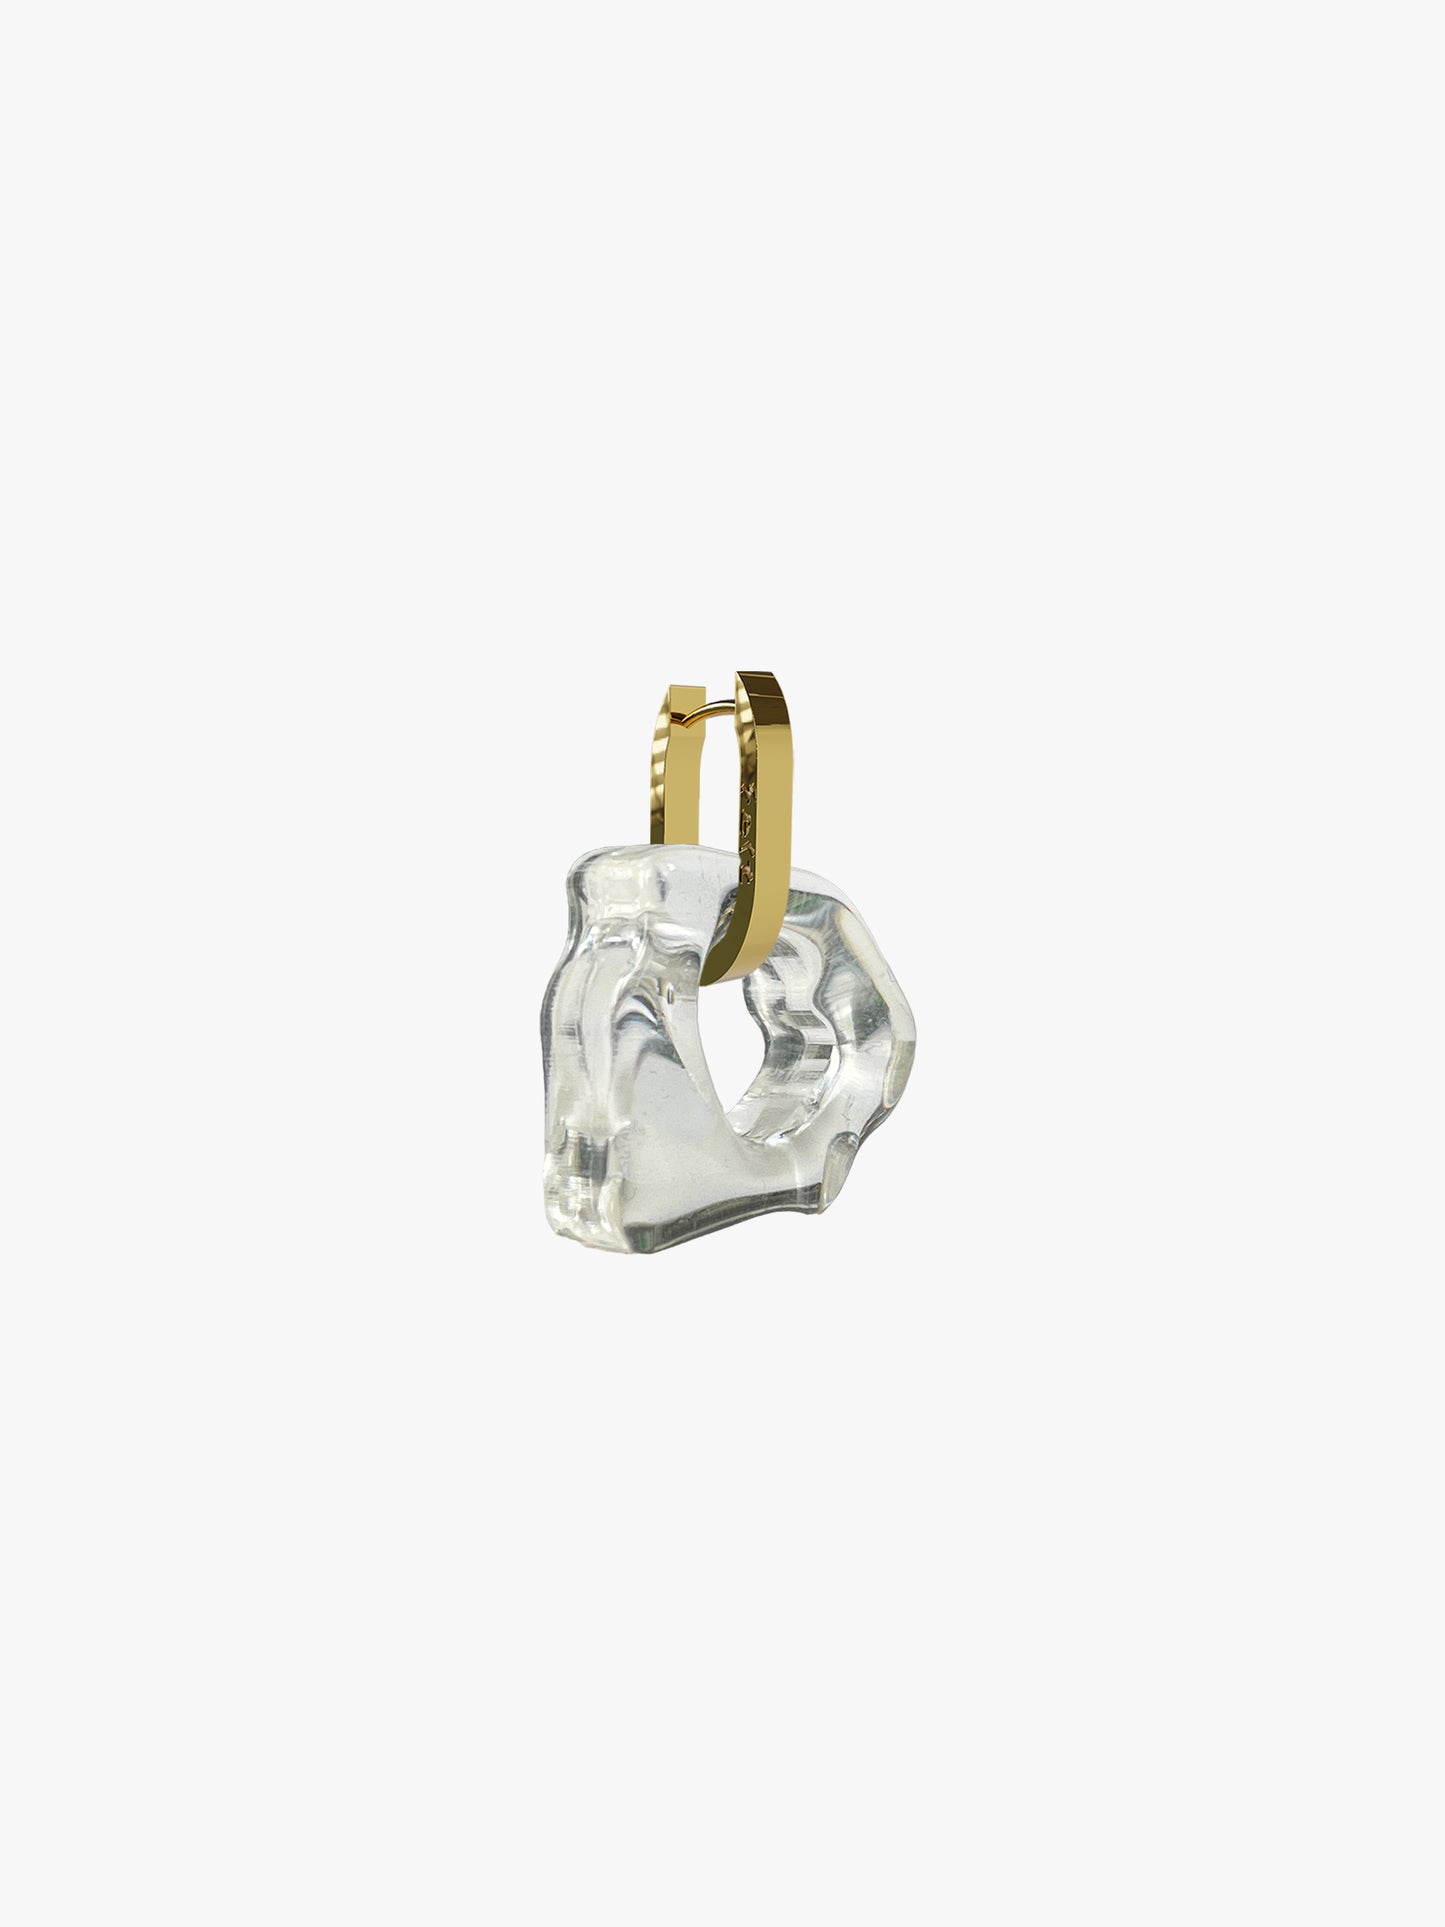 Ora transparent gold earring 2 (pair)